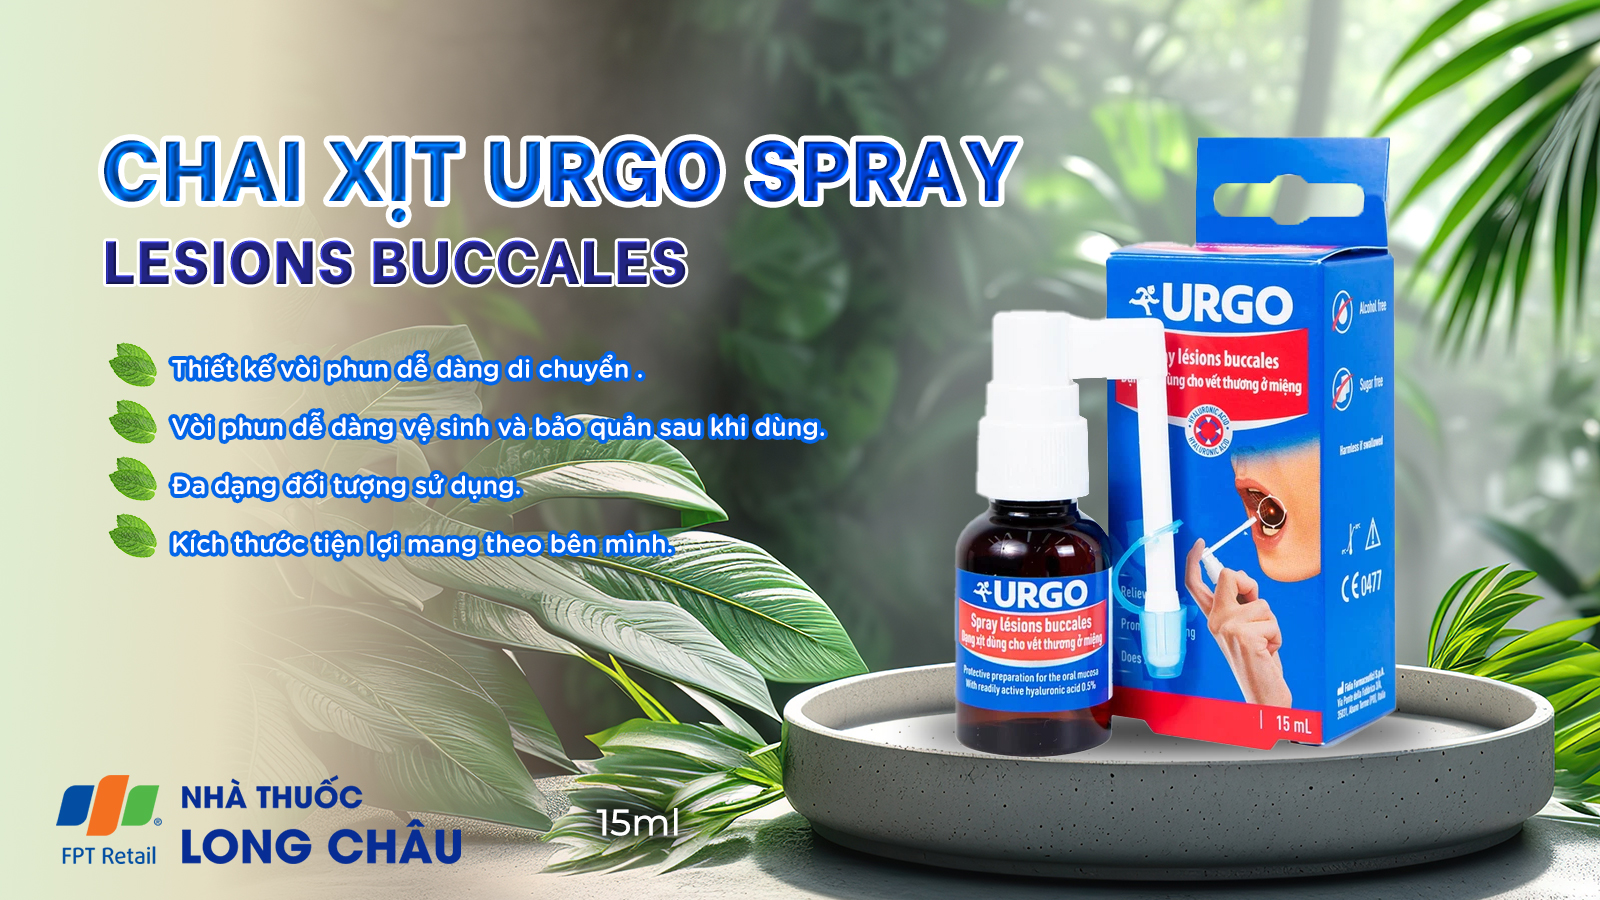 Chai-xịt-Urgo-Spray-Lesions-Buccales.jpg